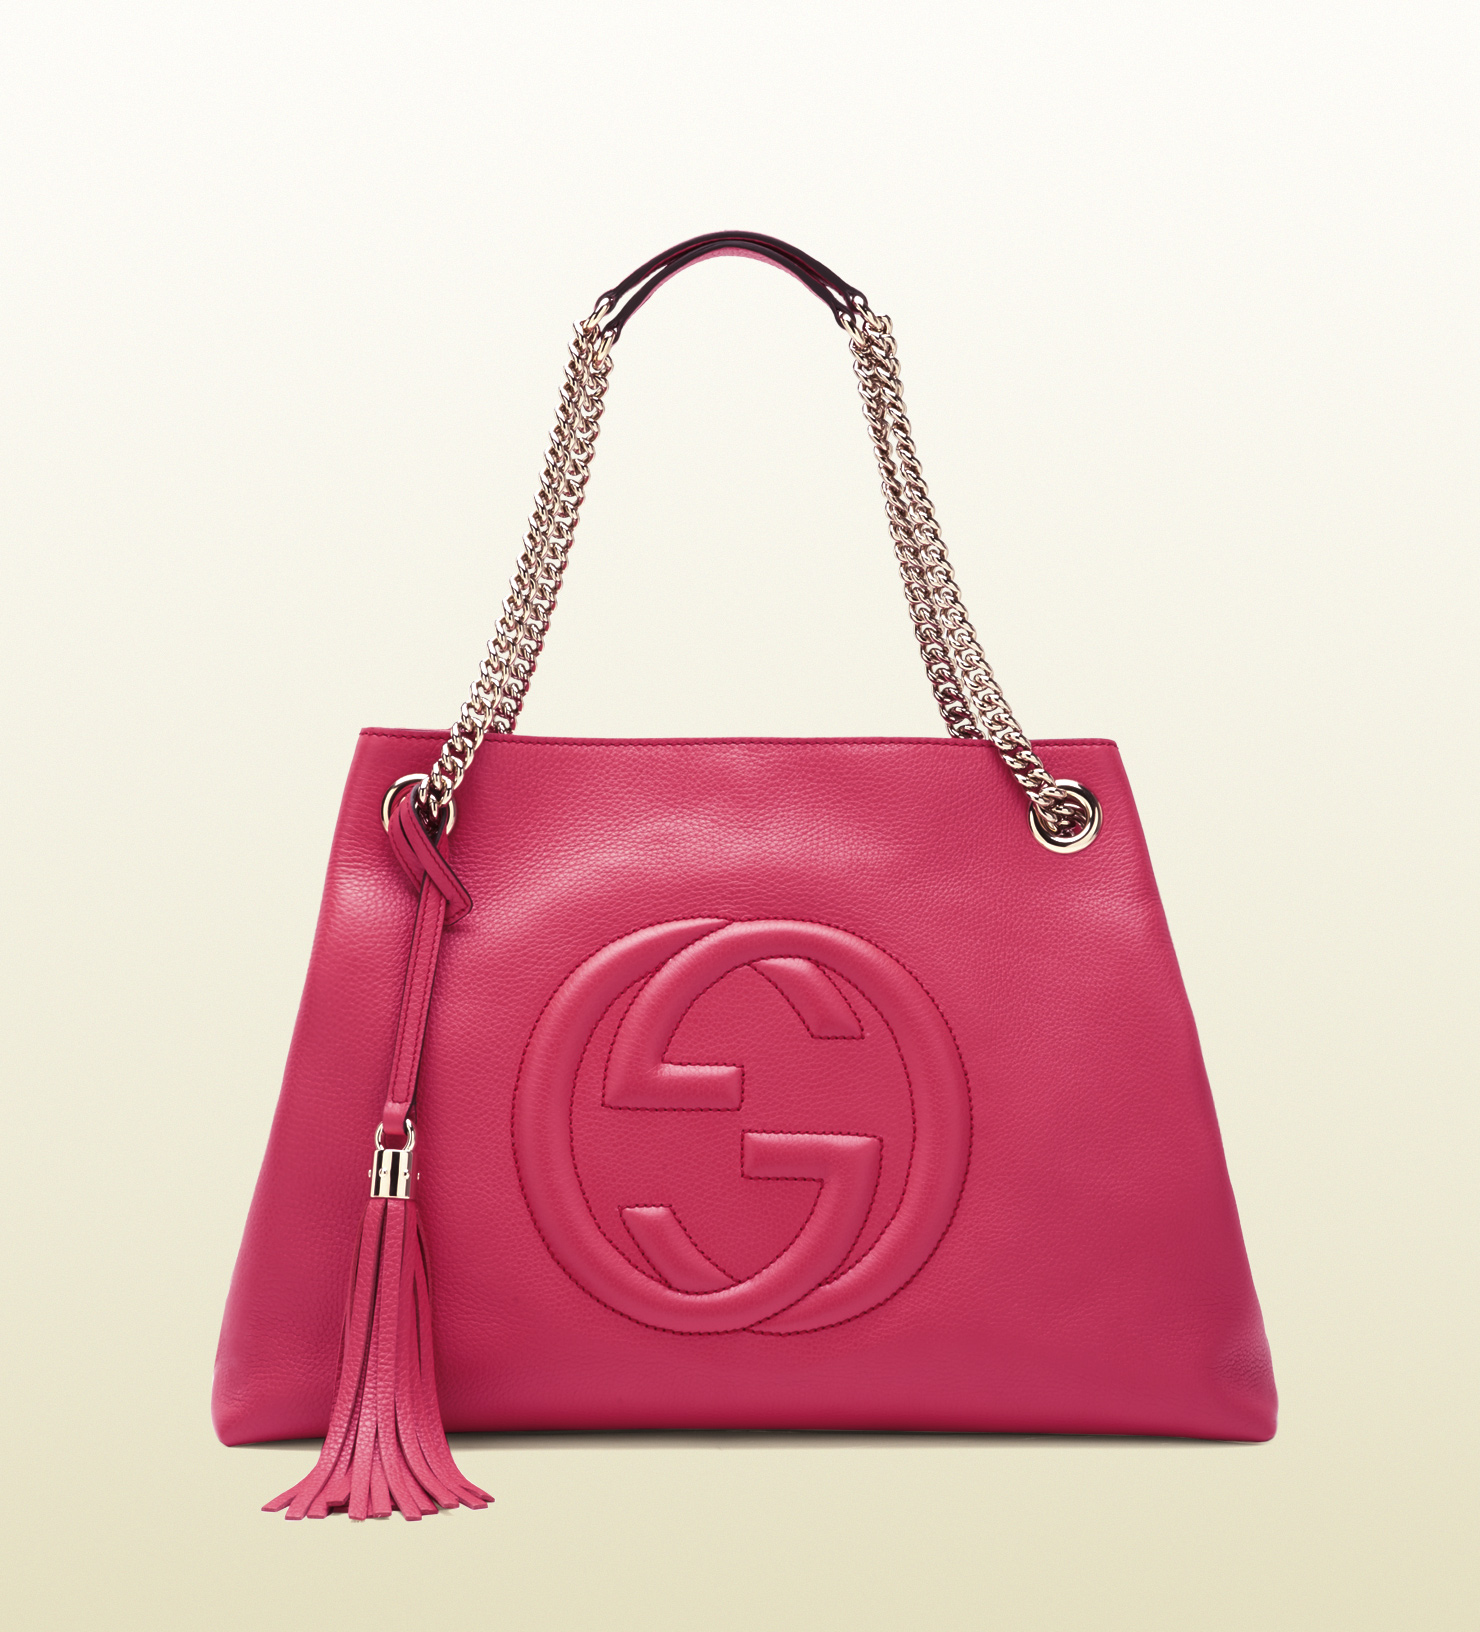 Pink Gucci Bag Minimum | semashow.com